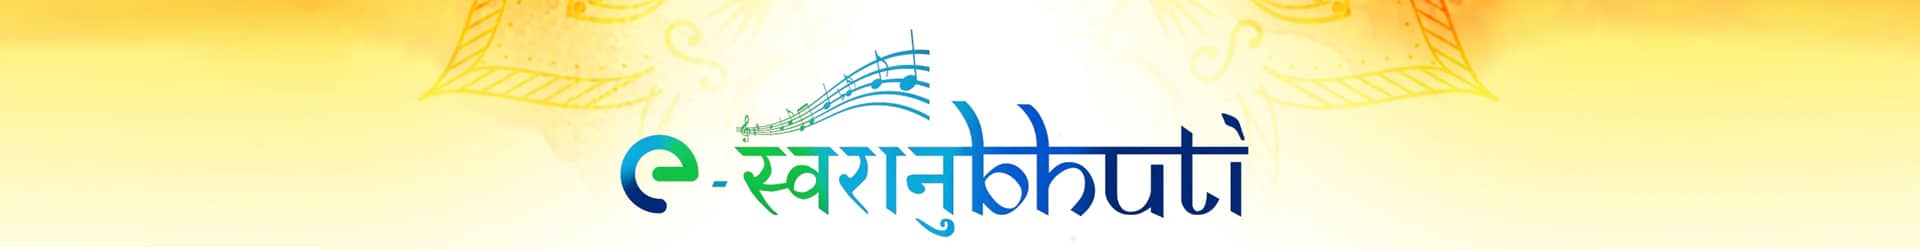 eSwaranubhuti page banner | swaranubhuti